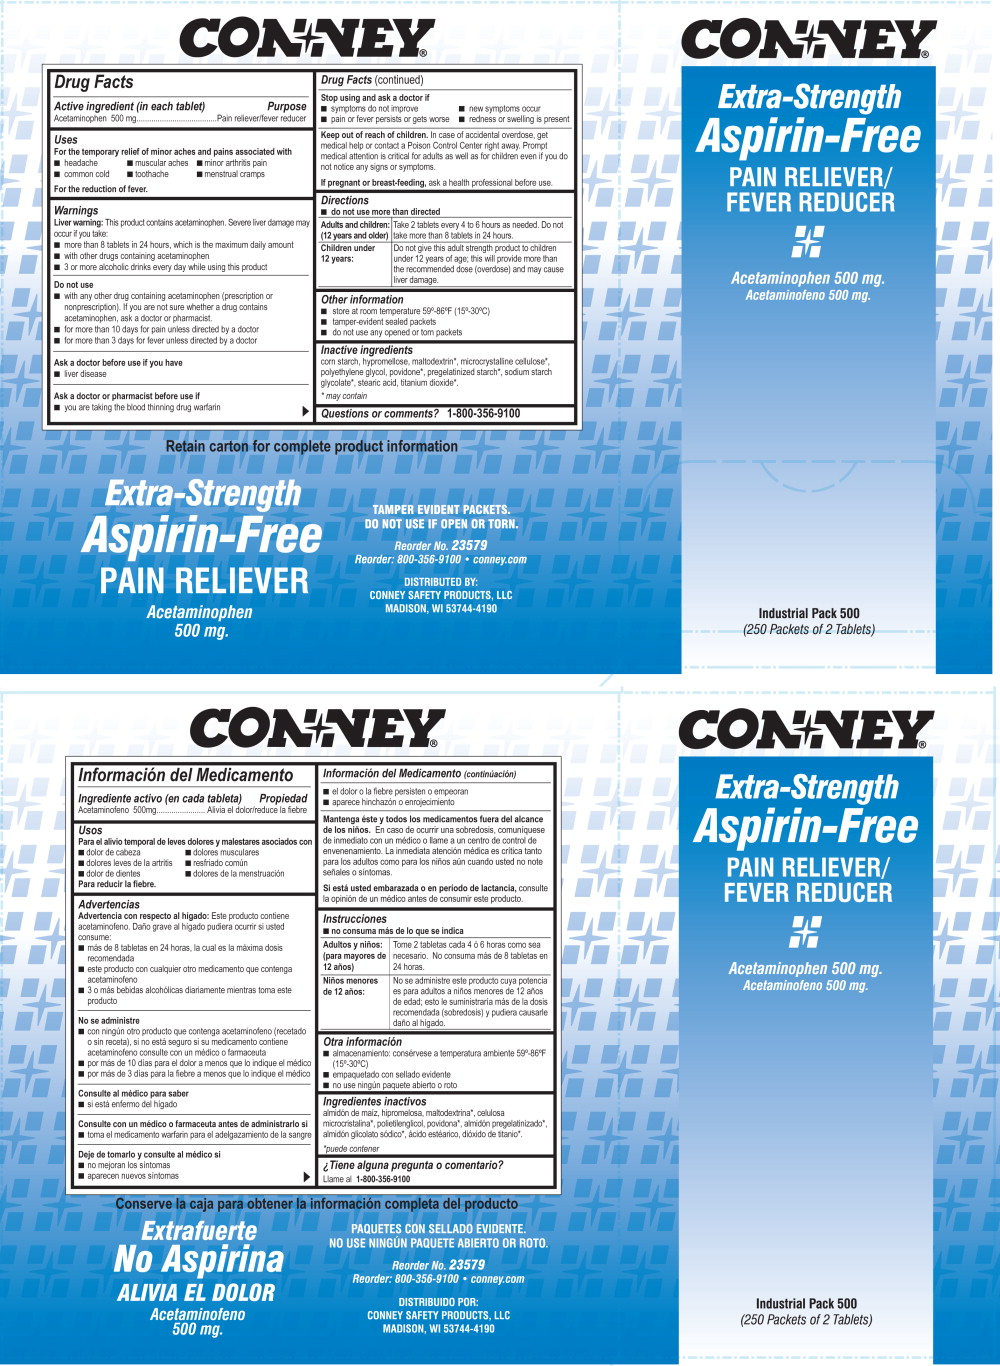 Conney Aspirin-Free 500 mg Label
